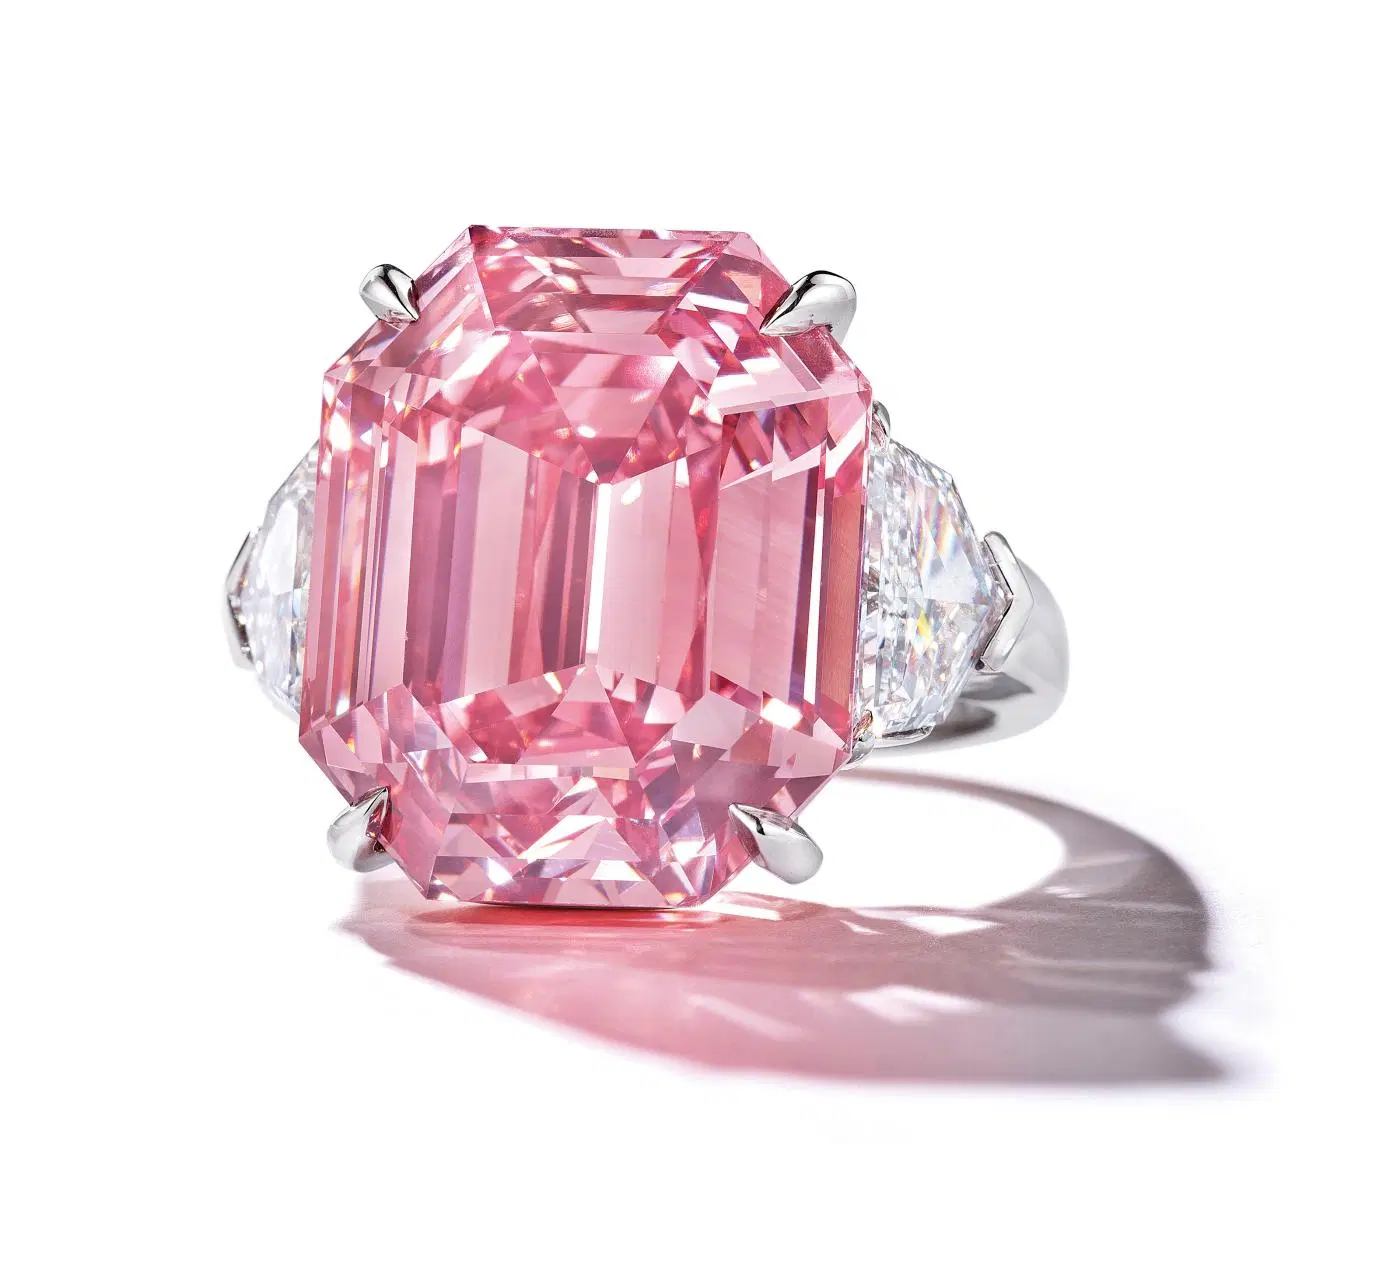 High-quality and rare pink diamond ring